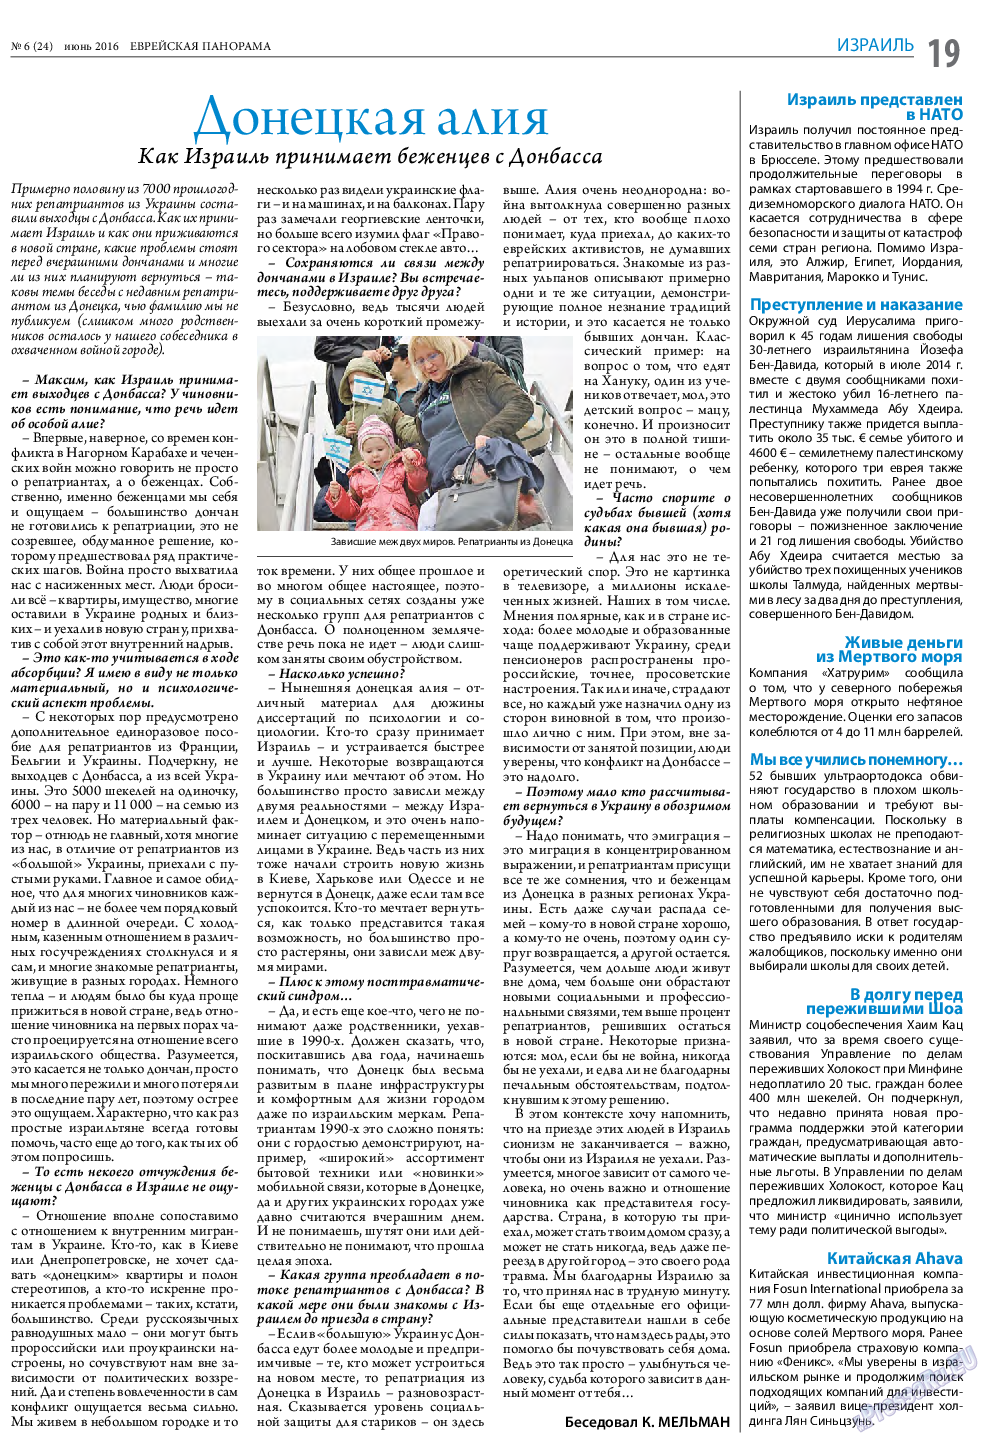 Еврейская панорама, газета. 2016 №6 стр.19